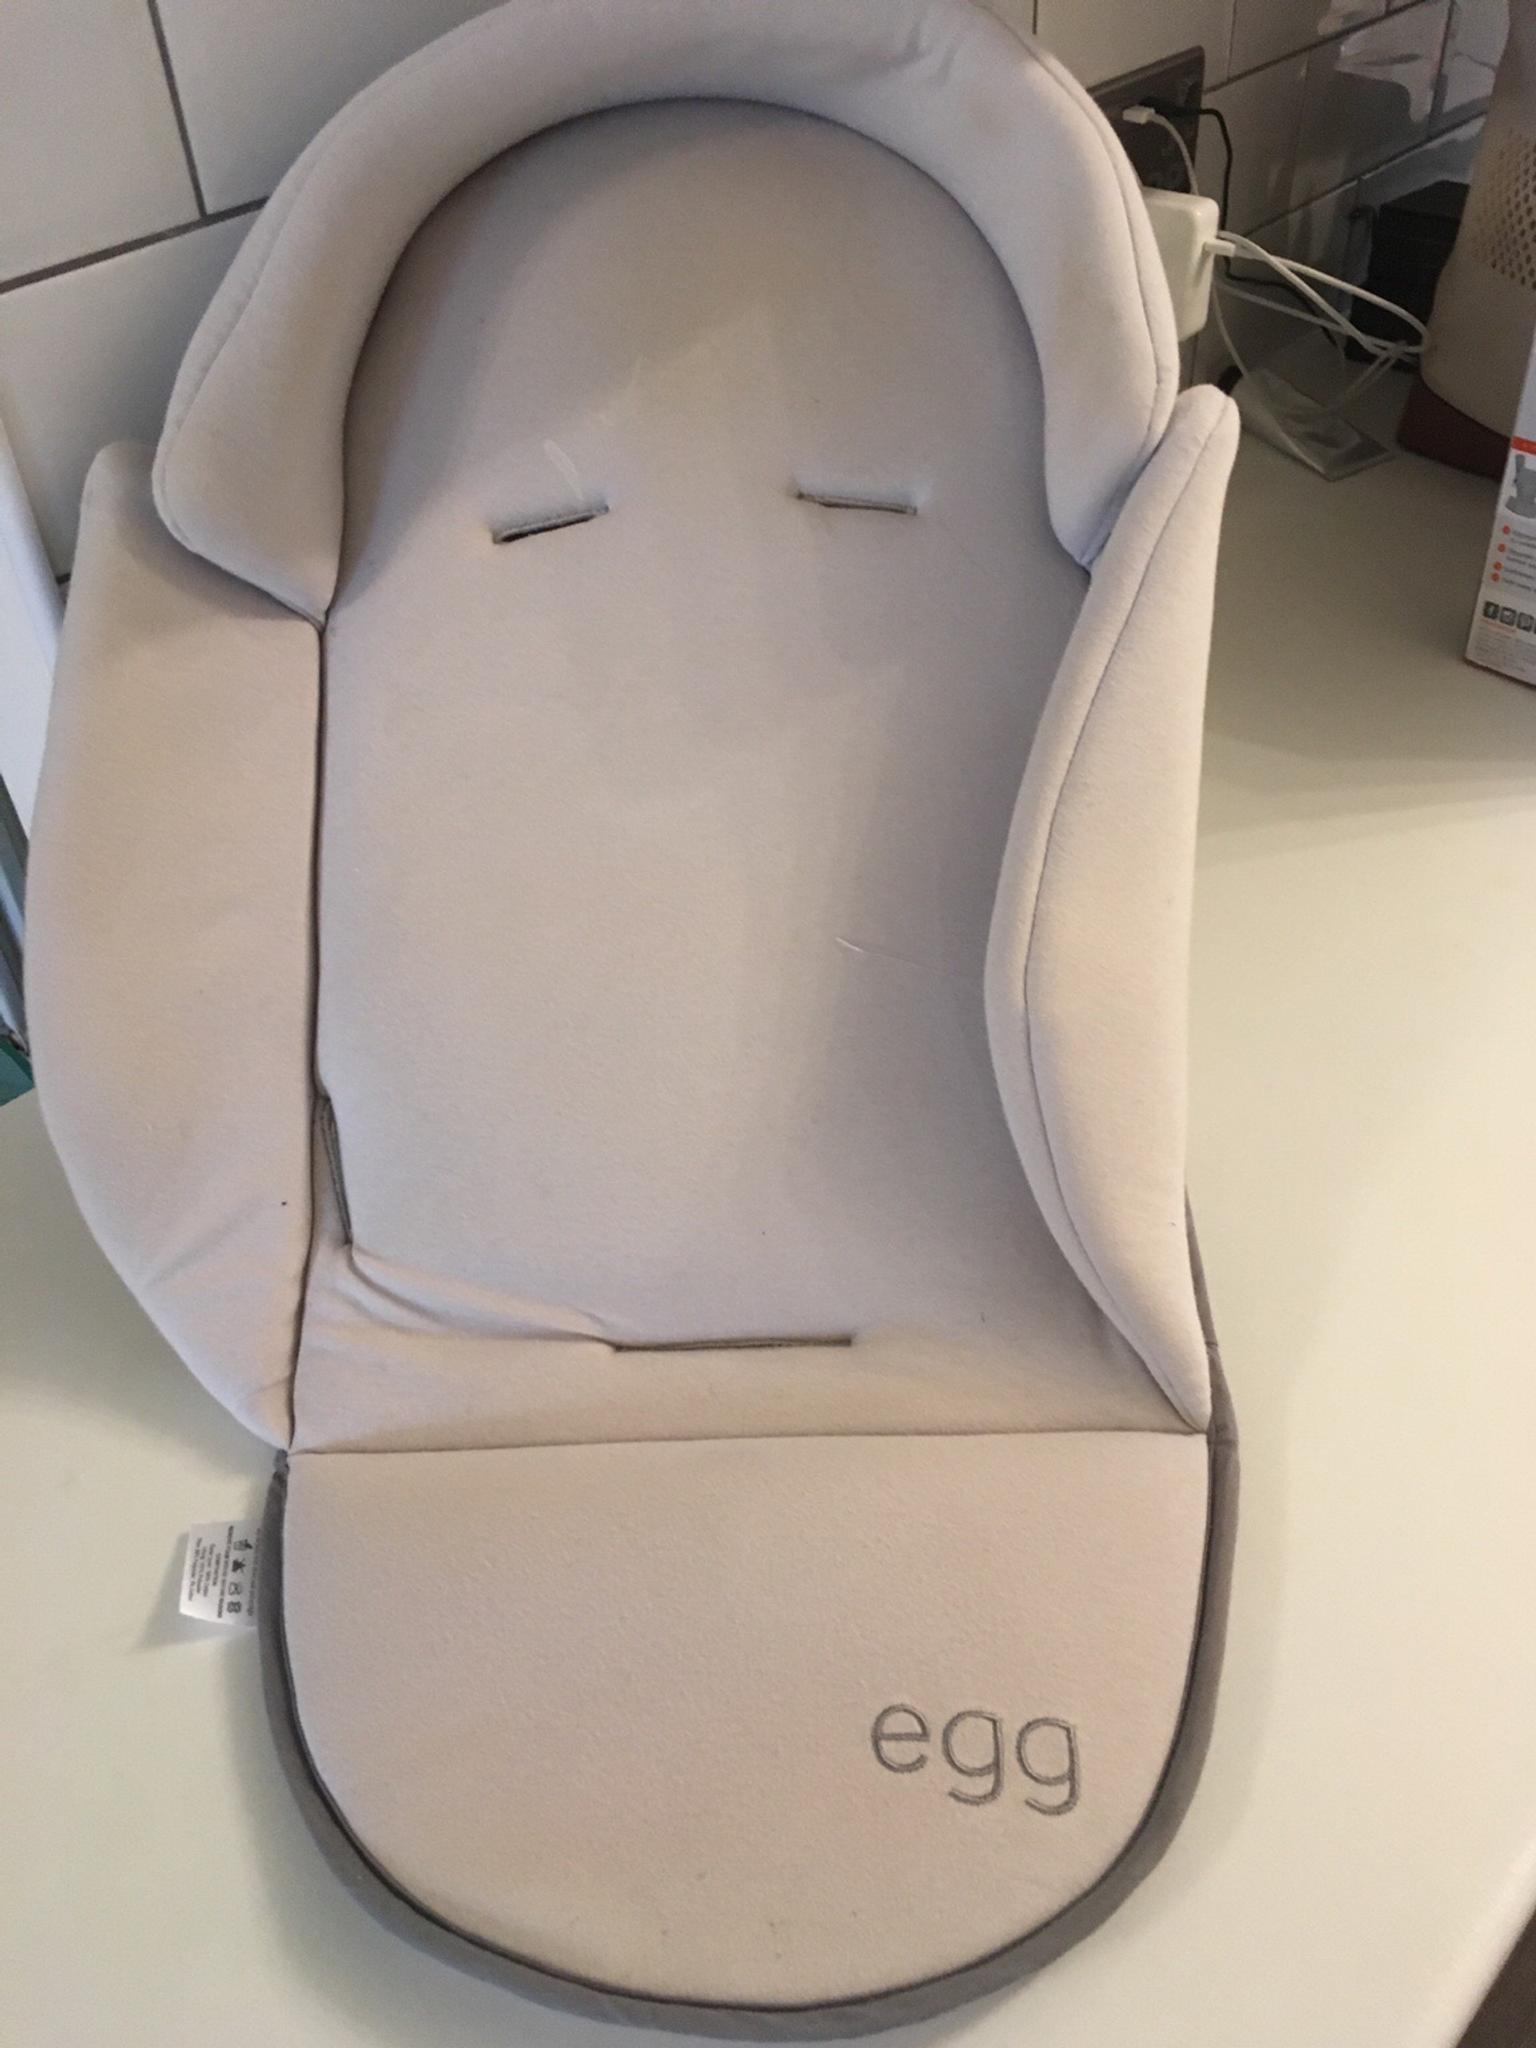 egg pushchair newborn insert